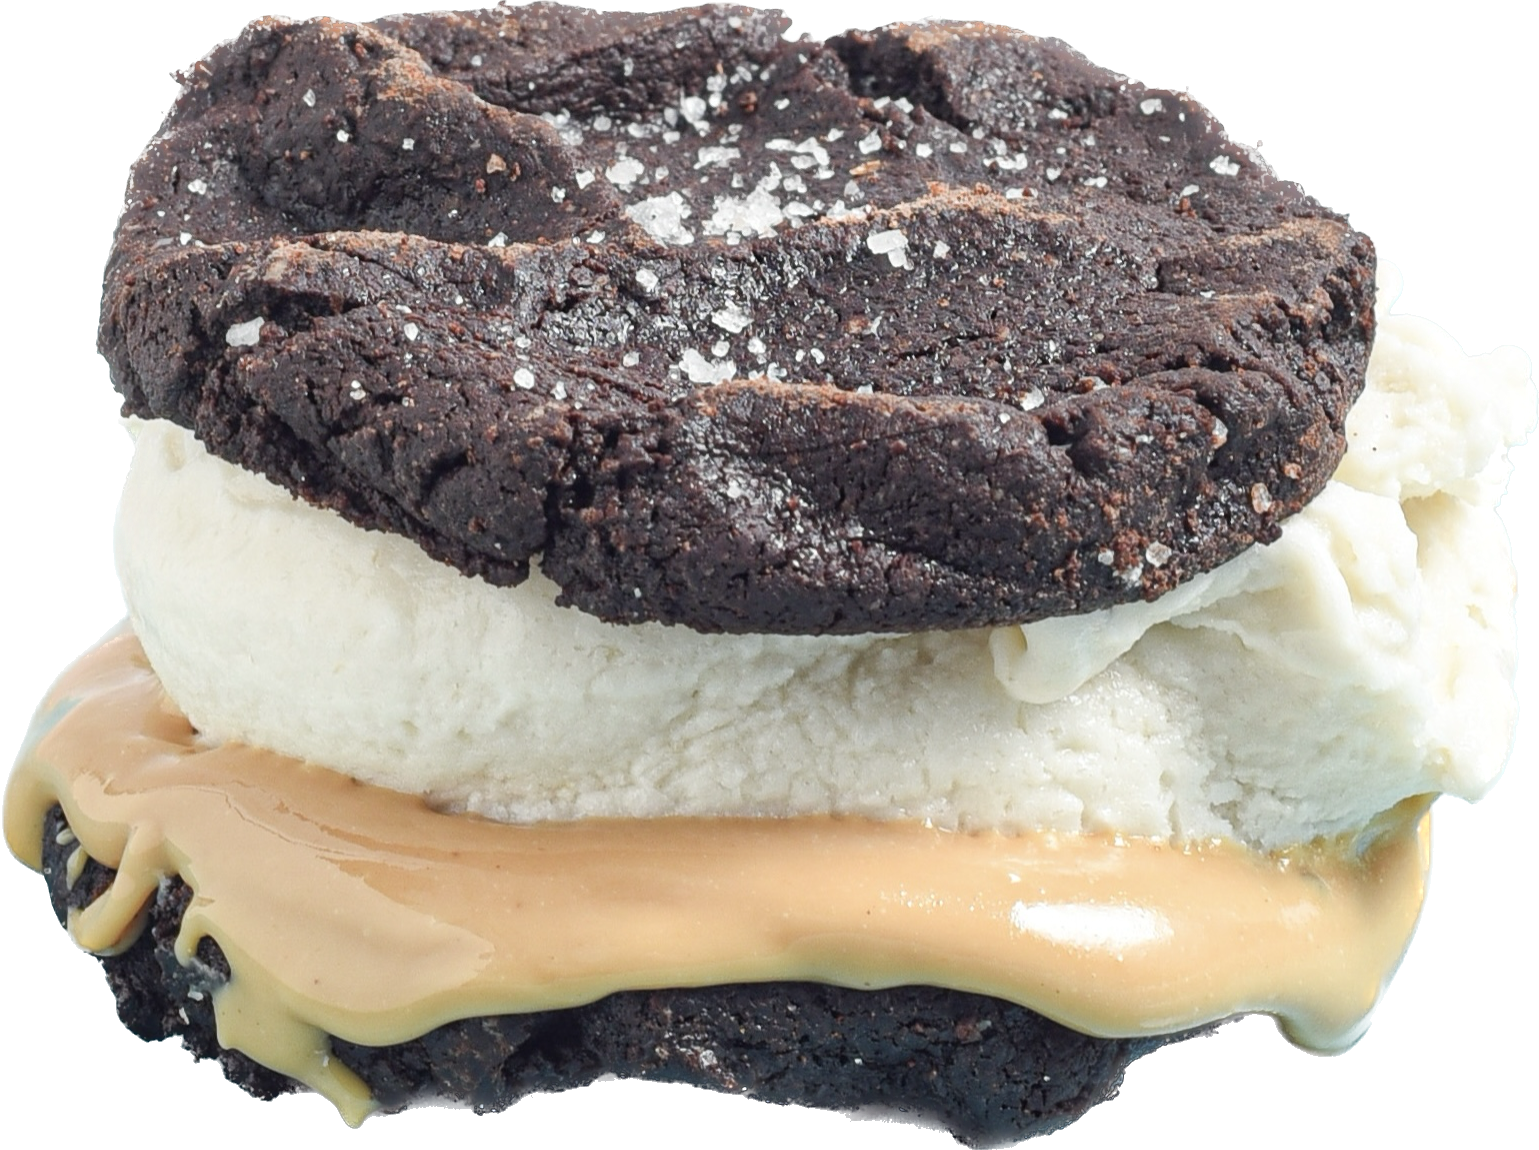 Lenny Kravitz Ice Cream Sandwich